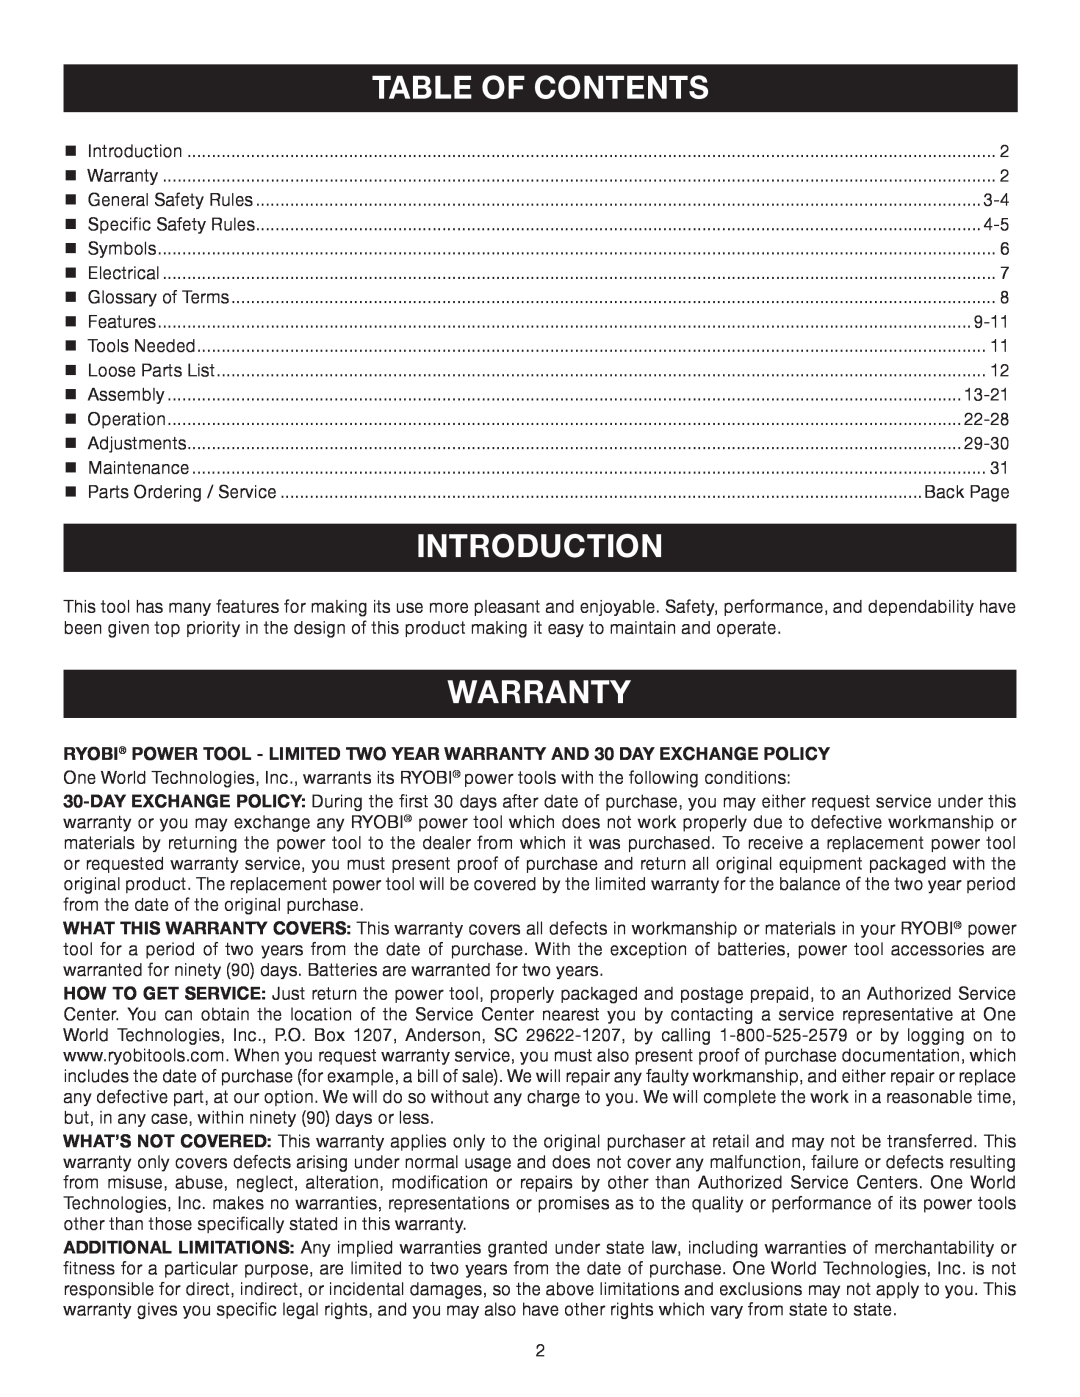 Ryobi TS1141 manual Introduction, warranty, Table Of Contents 